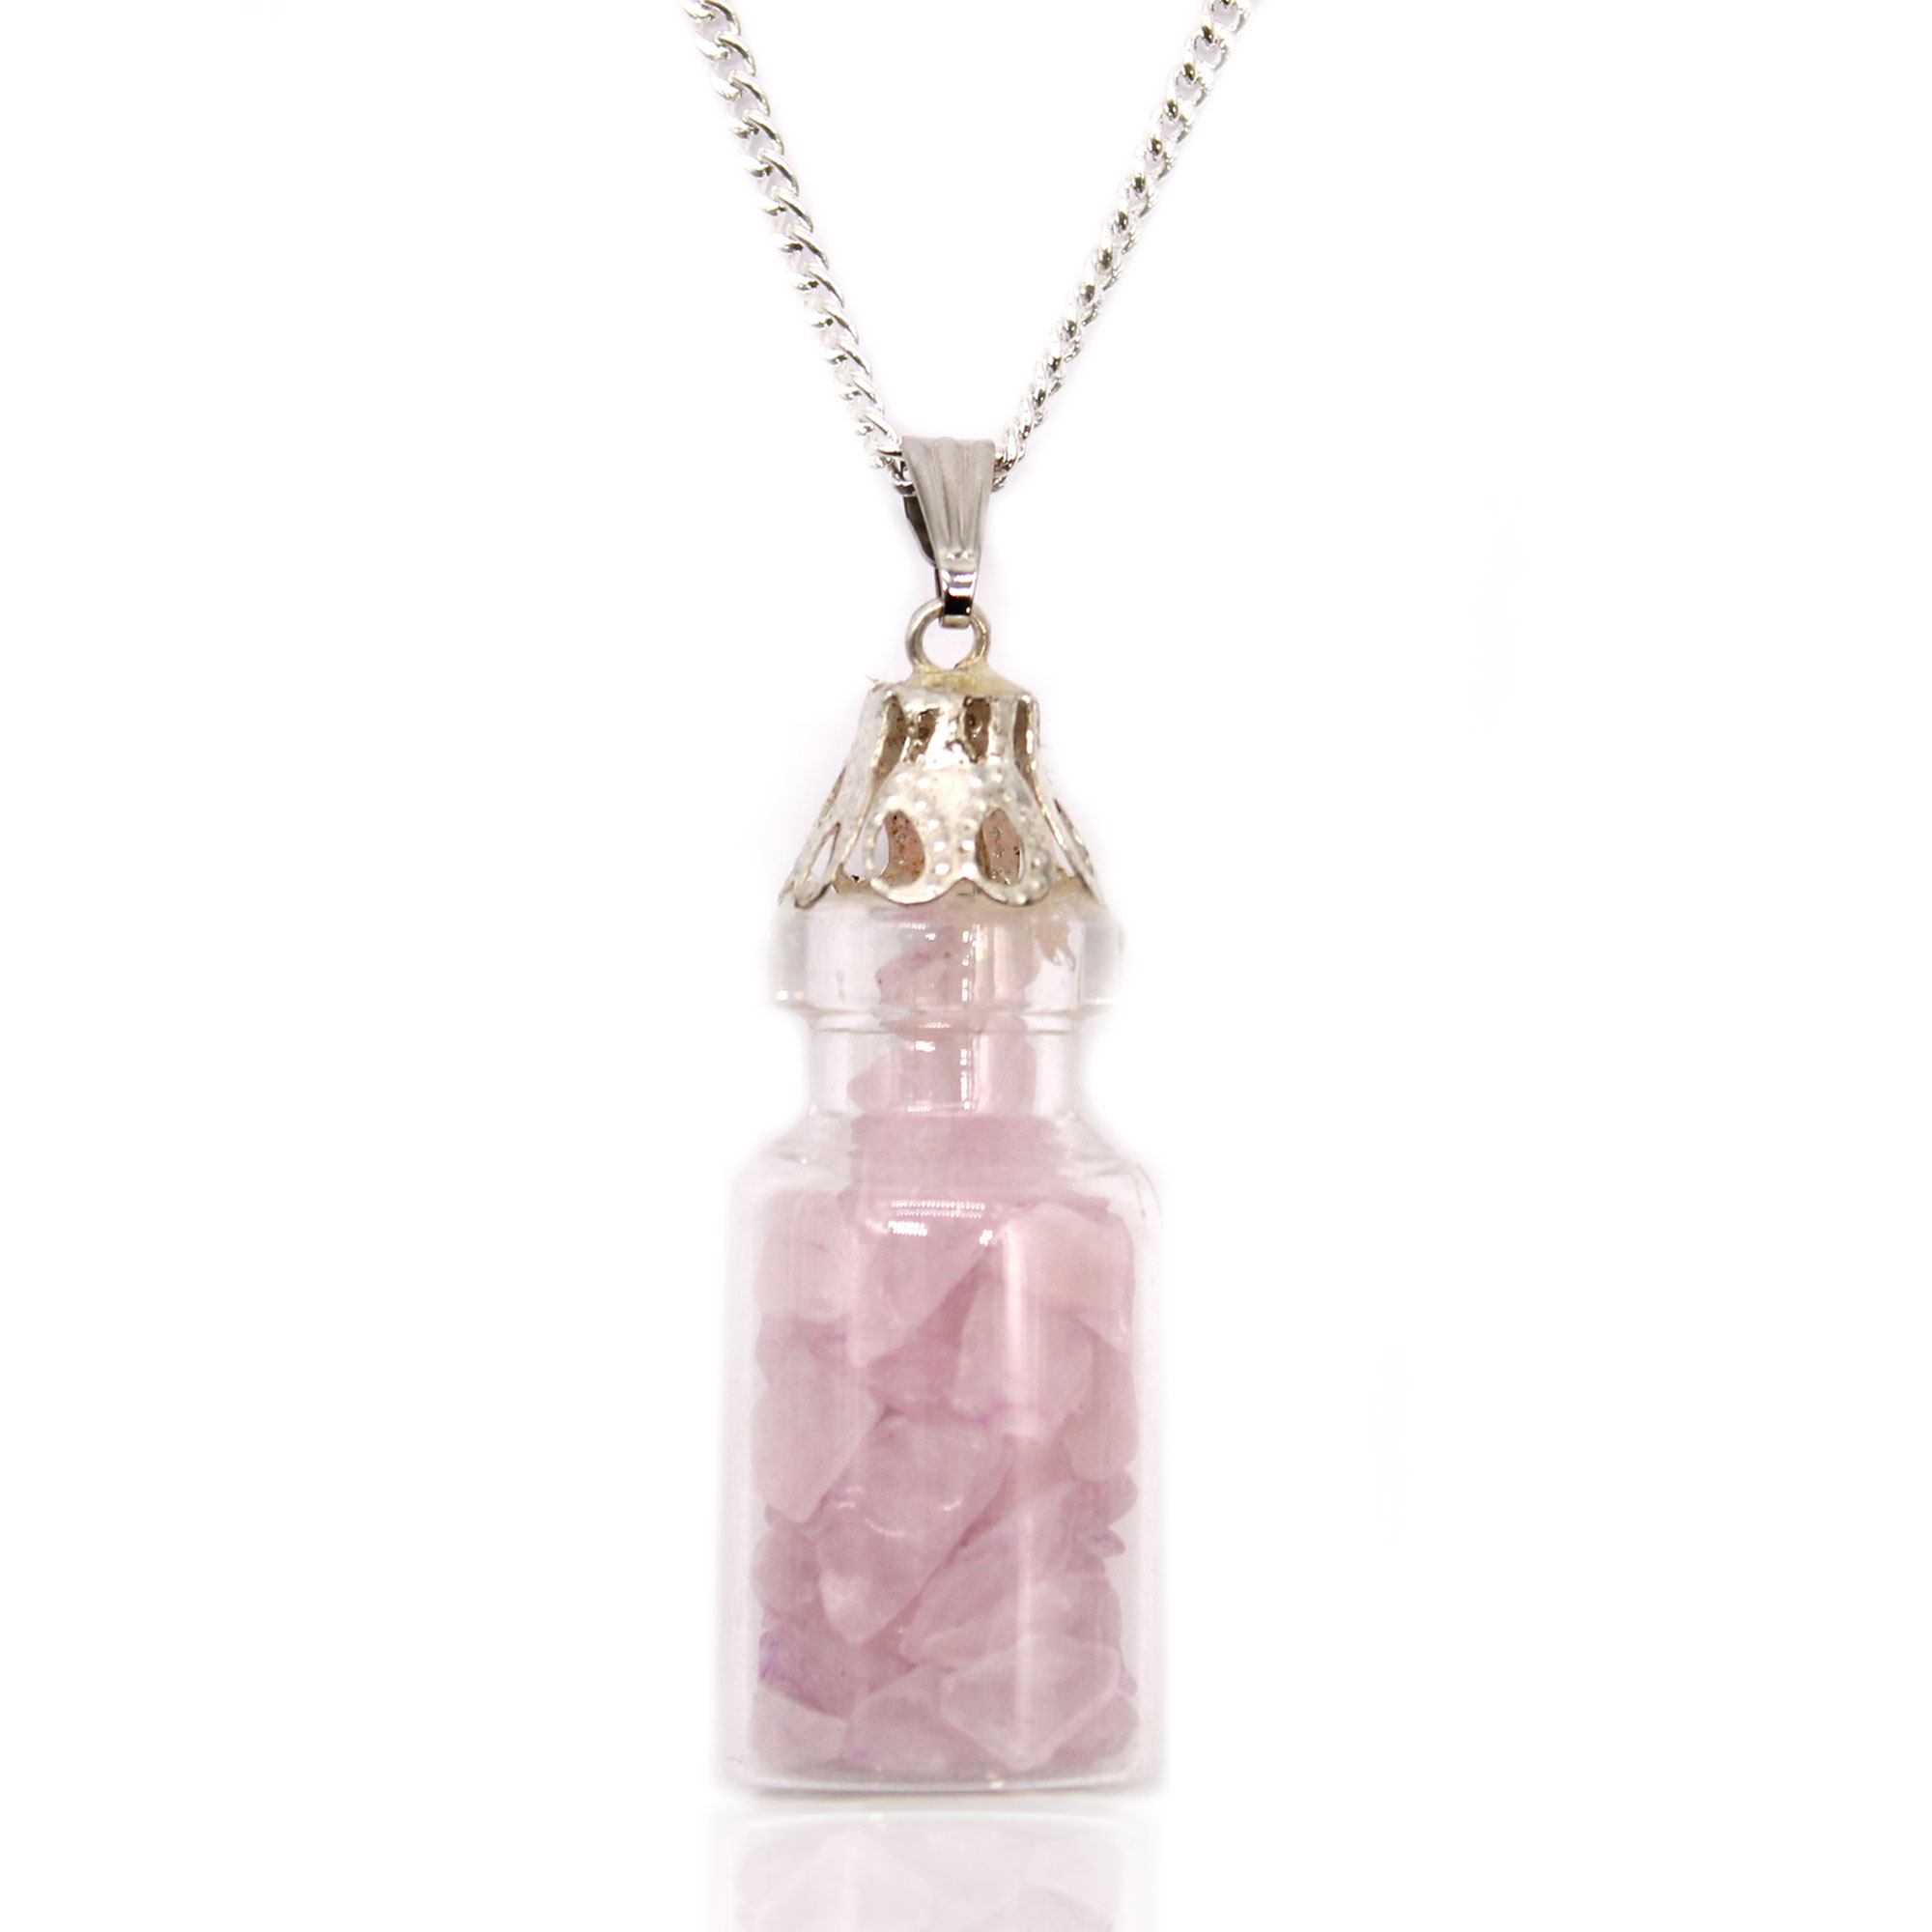 Bottled Gemstones Necklace - Rose Quartz - Click Image to Close